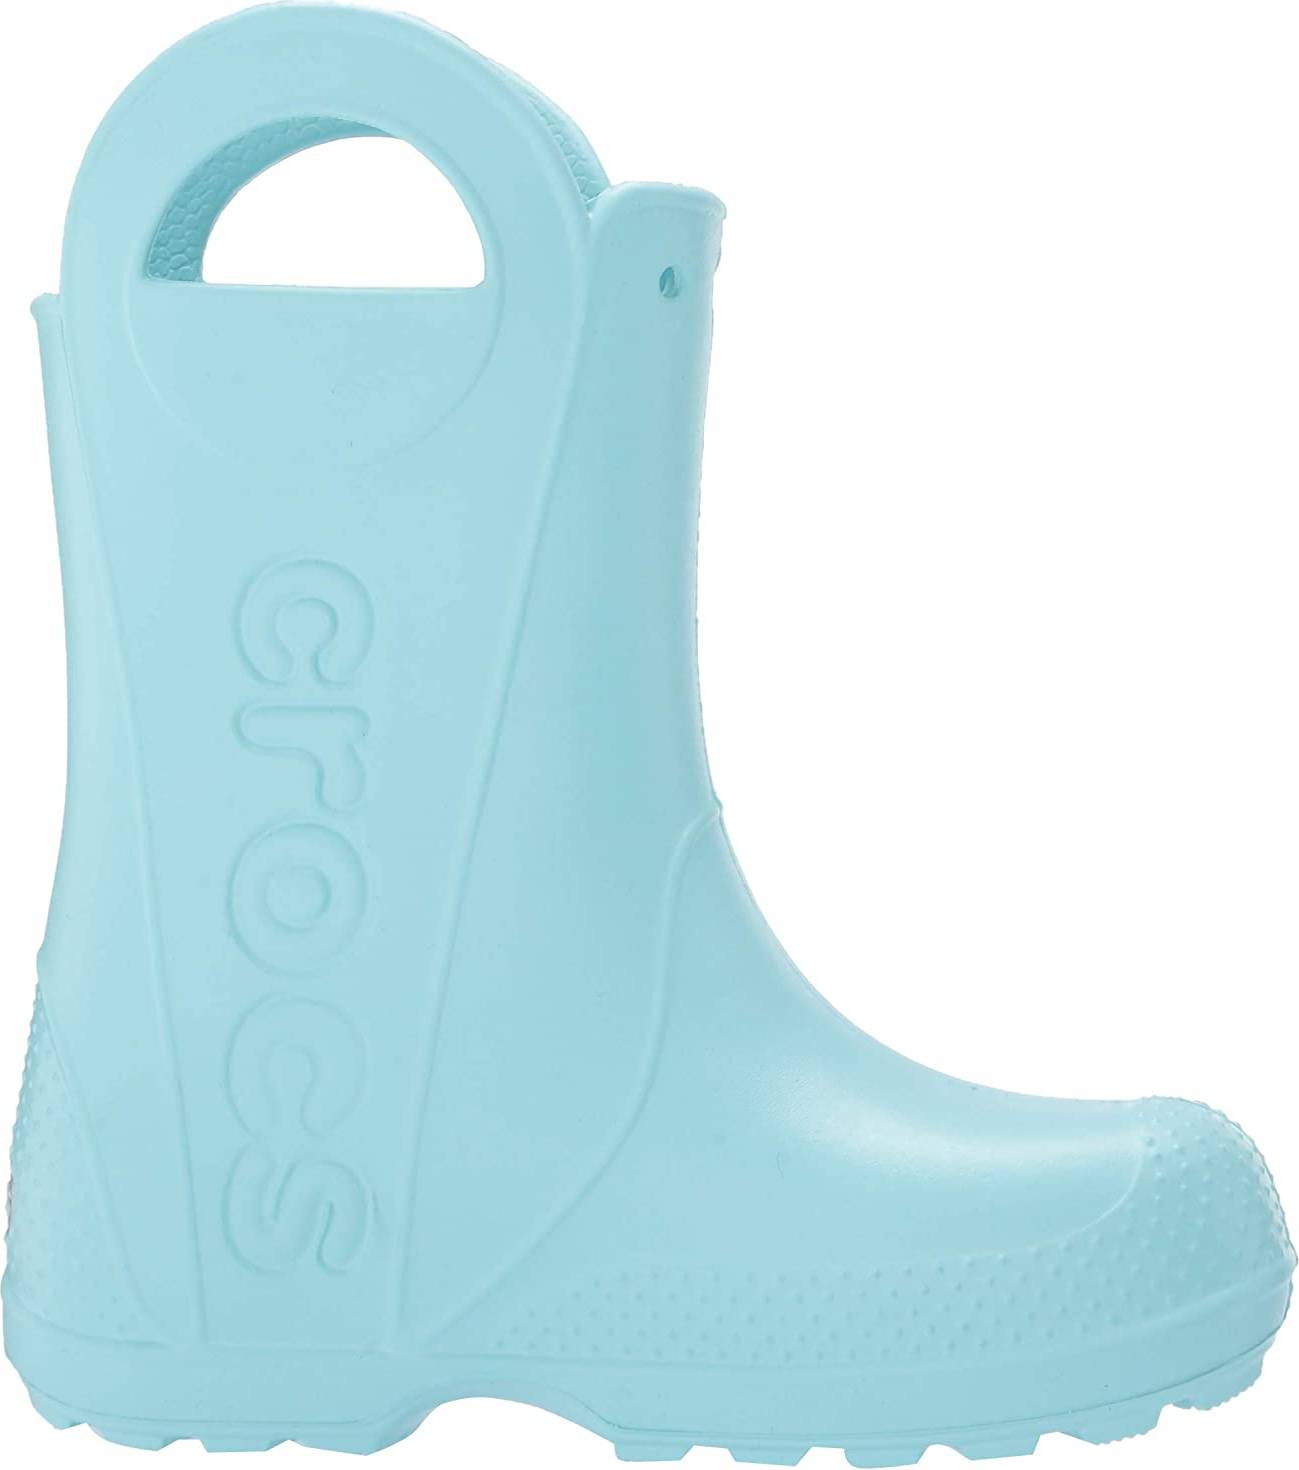  Bild på Crocs Kid's Handle It Rain Boot - Ice Blue gummistövlar